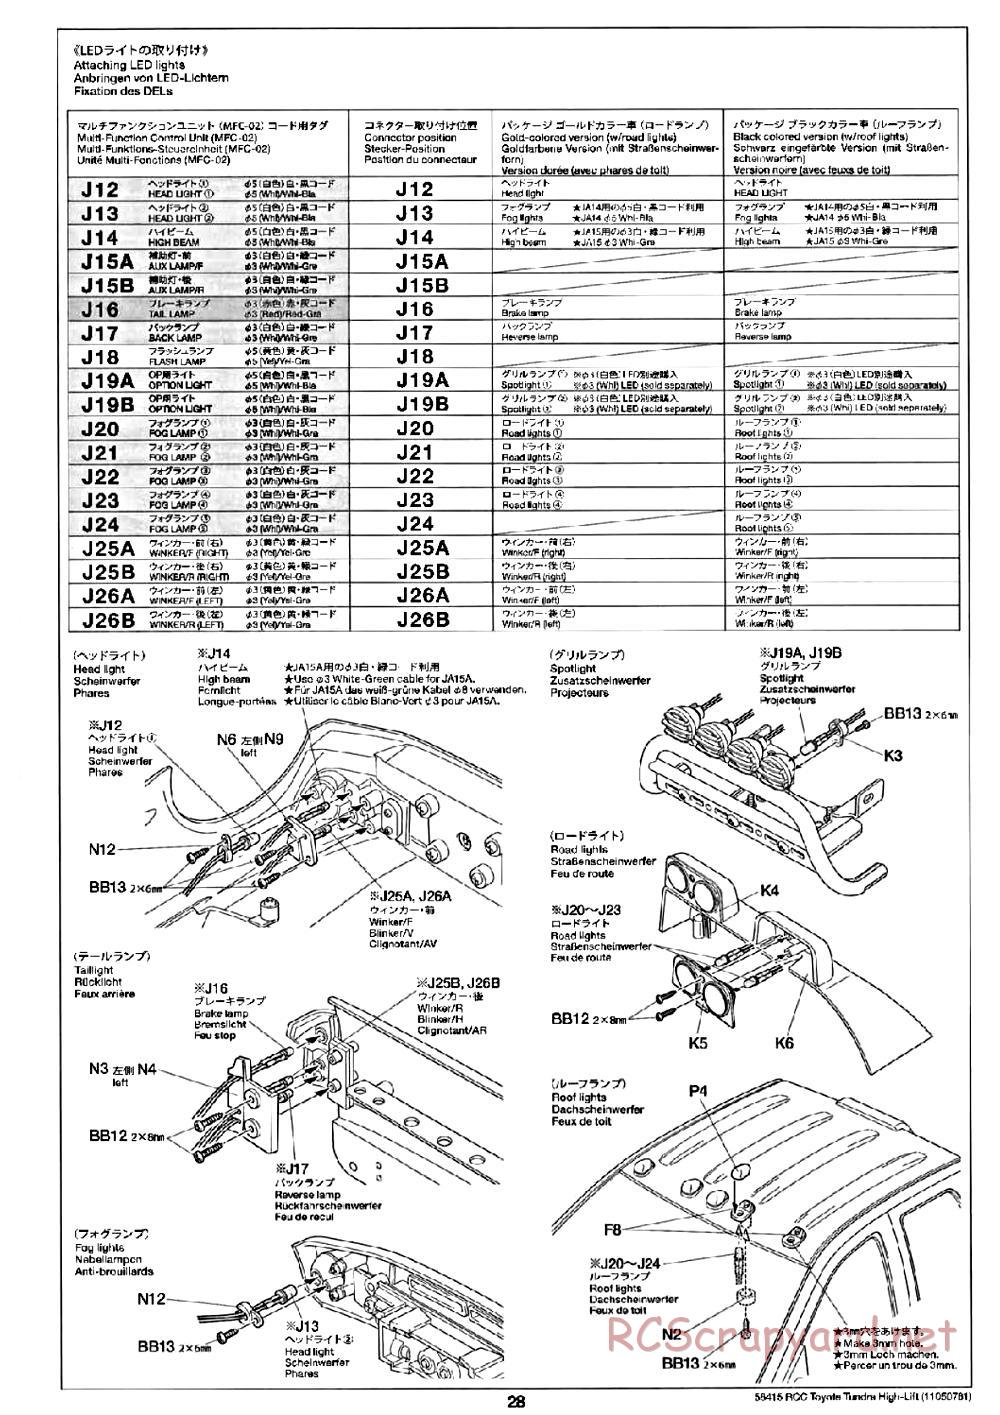 Tamiya - Toyota Tundra High-Lift Chassis - Manual - Page 28